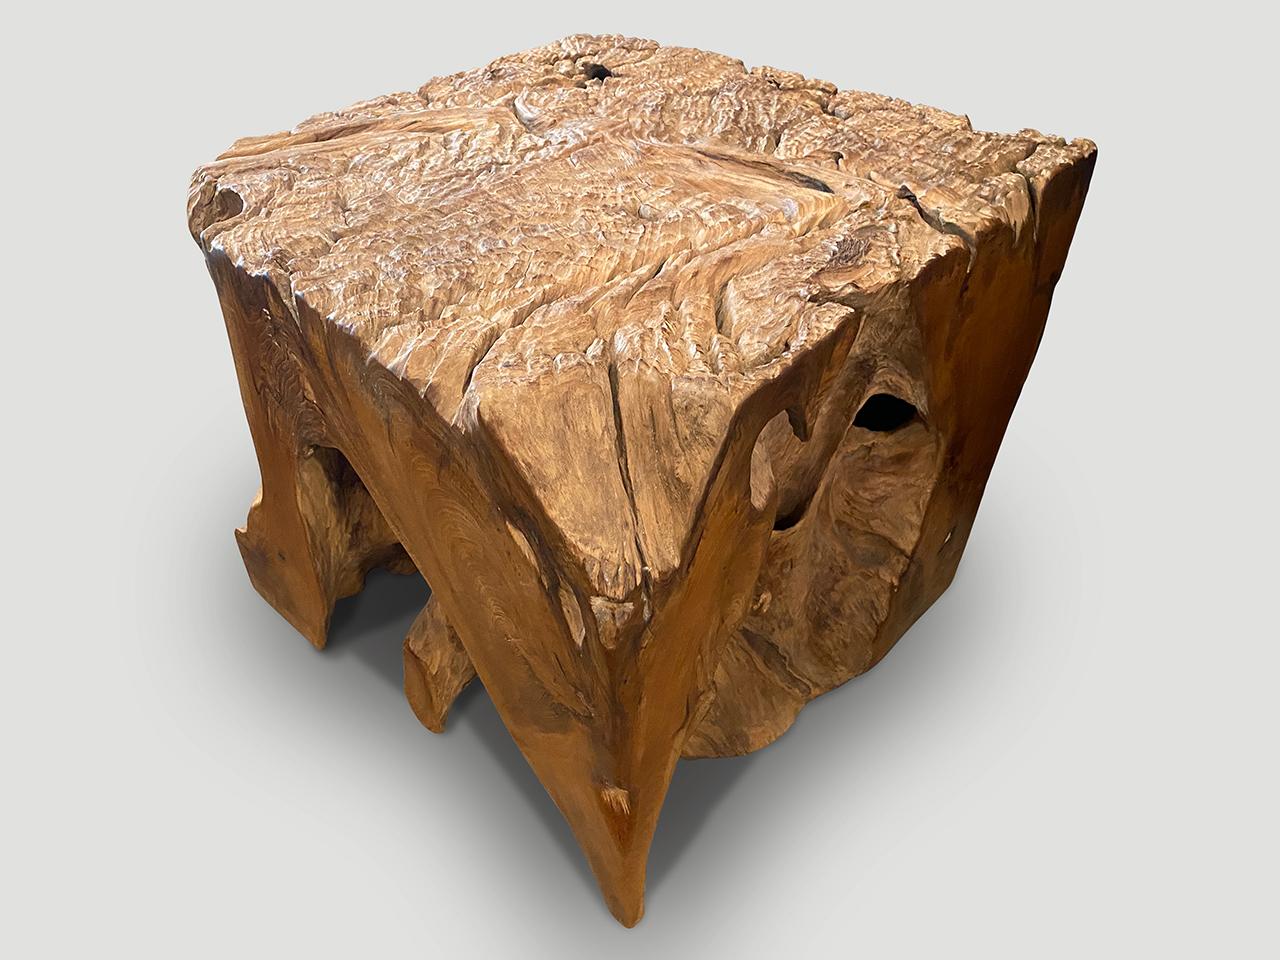 Organic Modern Andrianna Shamaris Impressive Organic Teak Wood Side Table or Pedestal For Sale